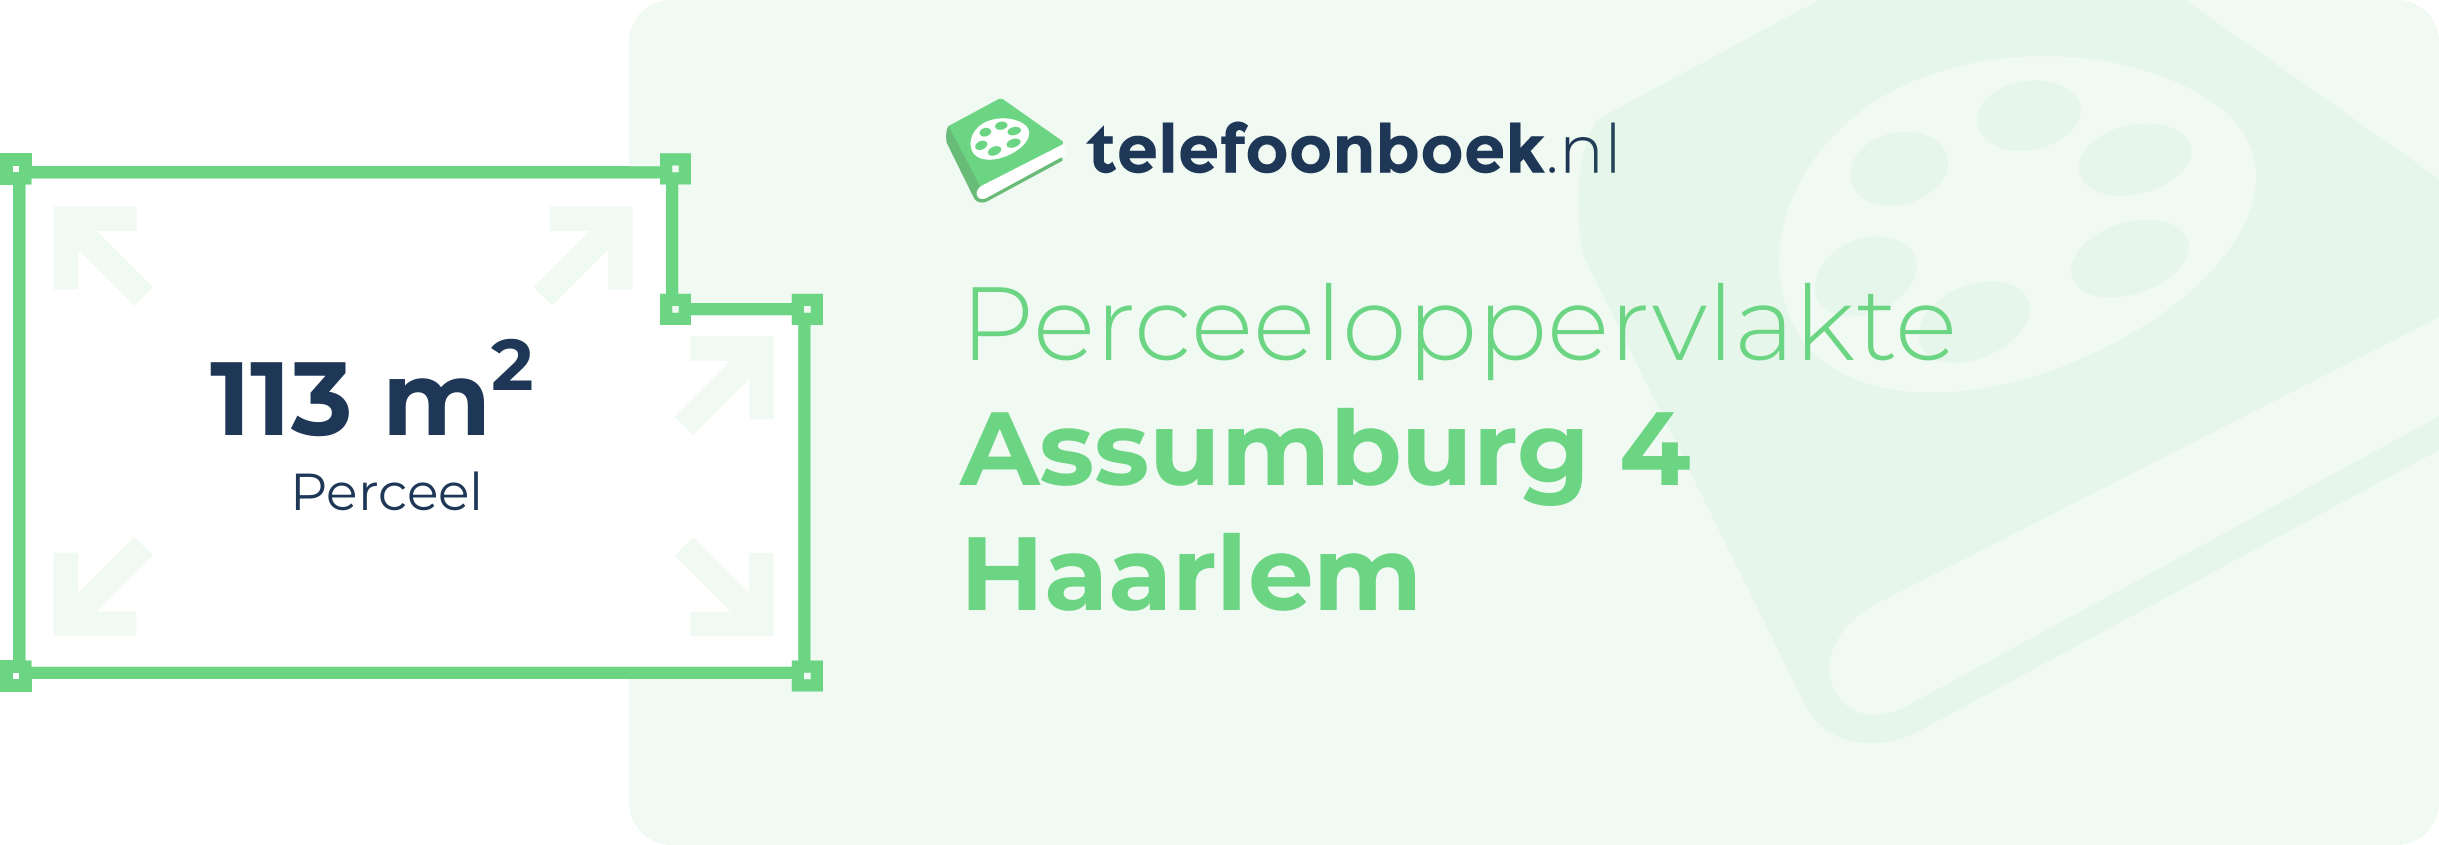 Perceeloppervlakte Assumburg 4 Haarlem